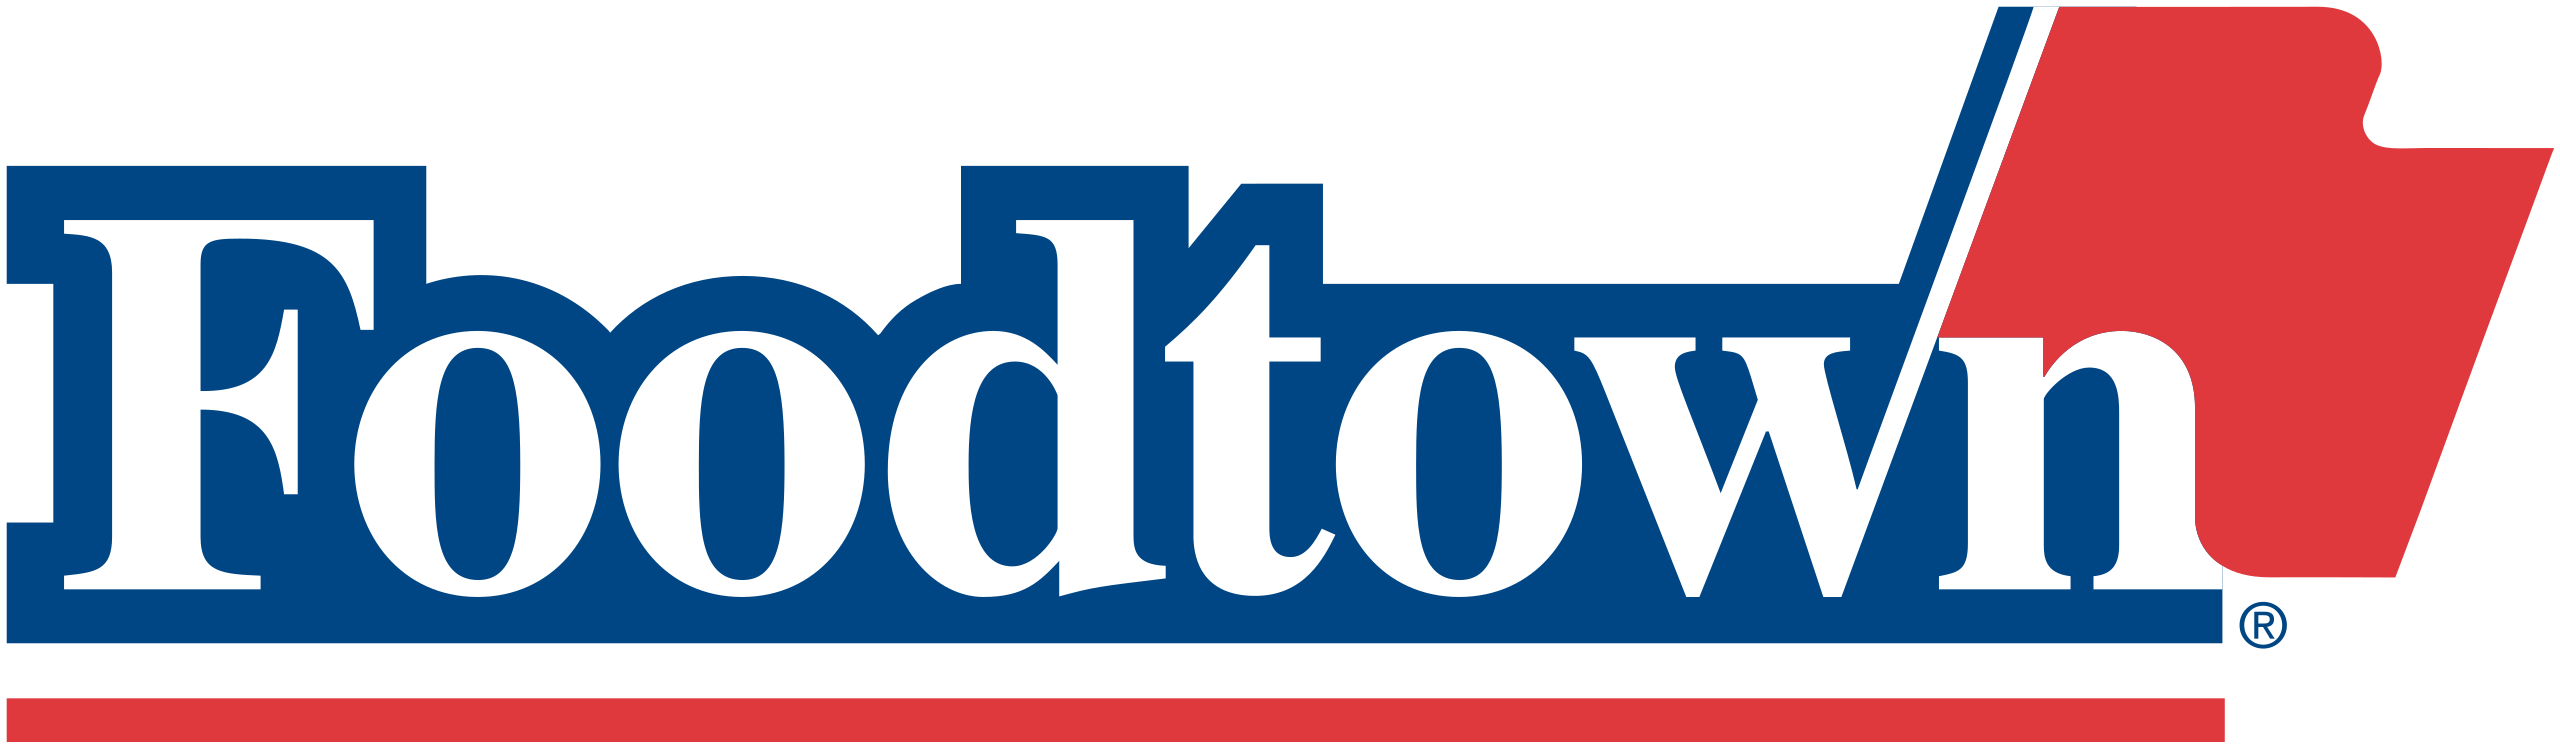 Foodtown_(United_States)_logo